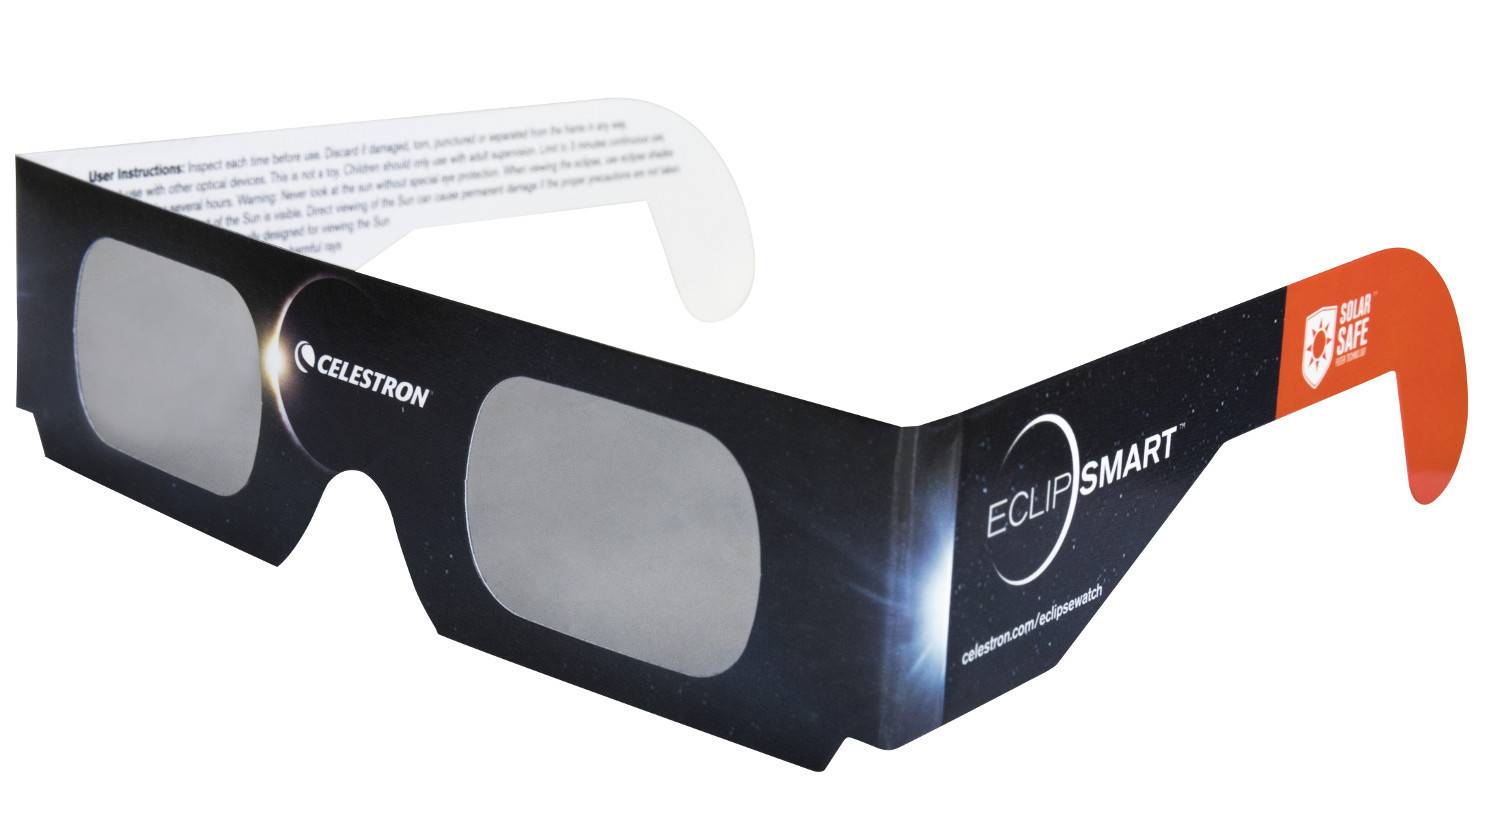 Celestron EclipSmart Solar Safe Filter Technology Eclipse Glasses, ISO 12312-2:2015 (E) Standard